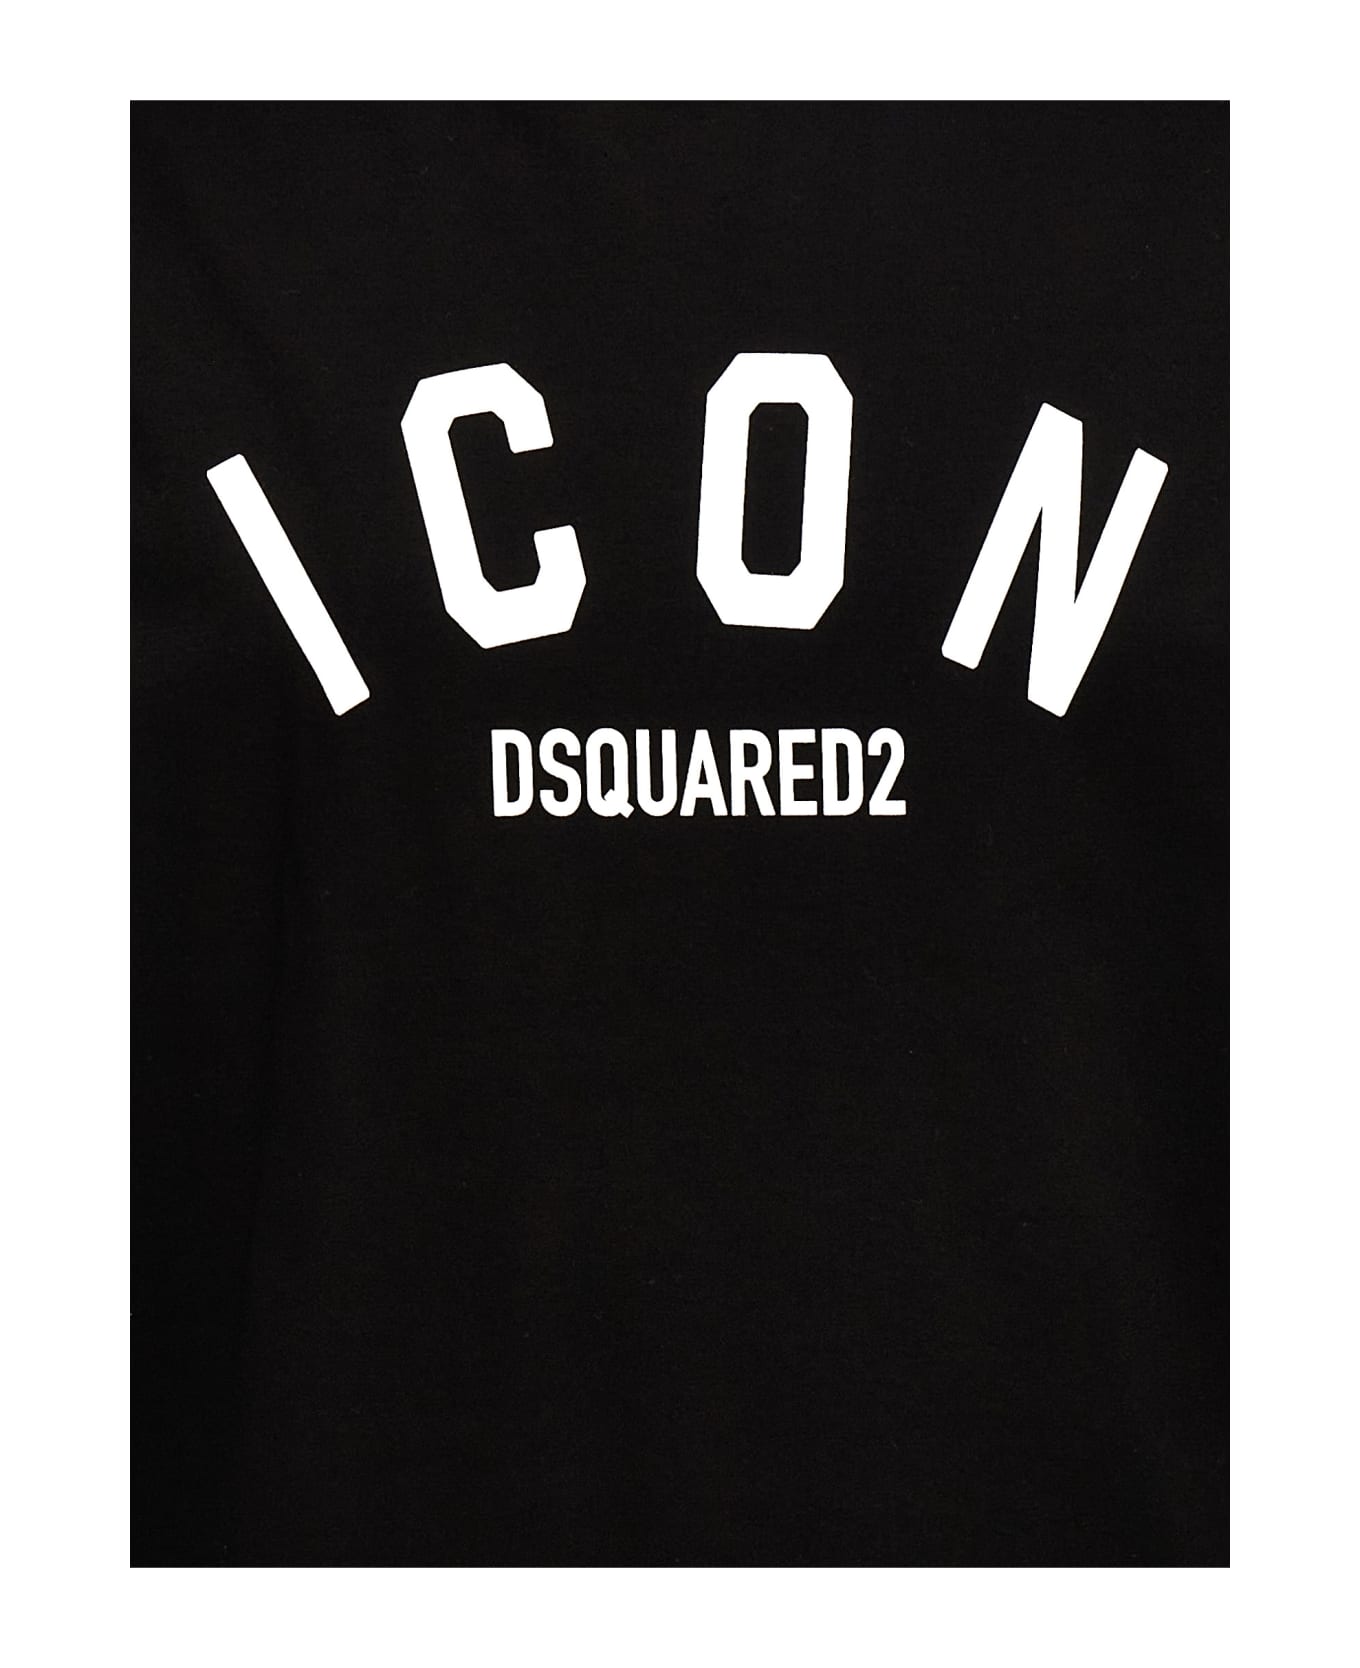 Dsquared2 Black Cotton Jersey T-shirt - Nero